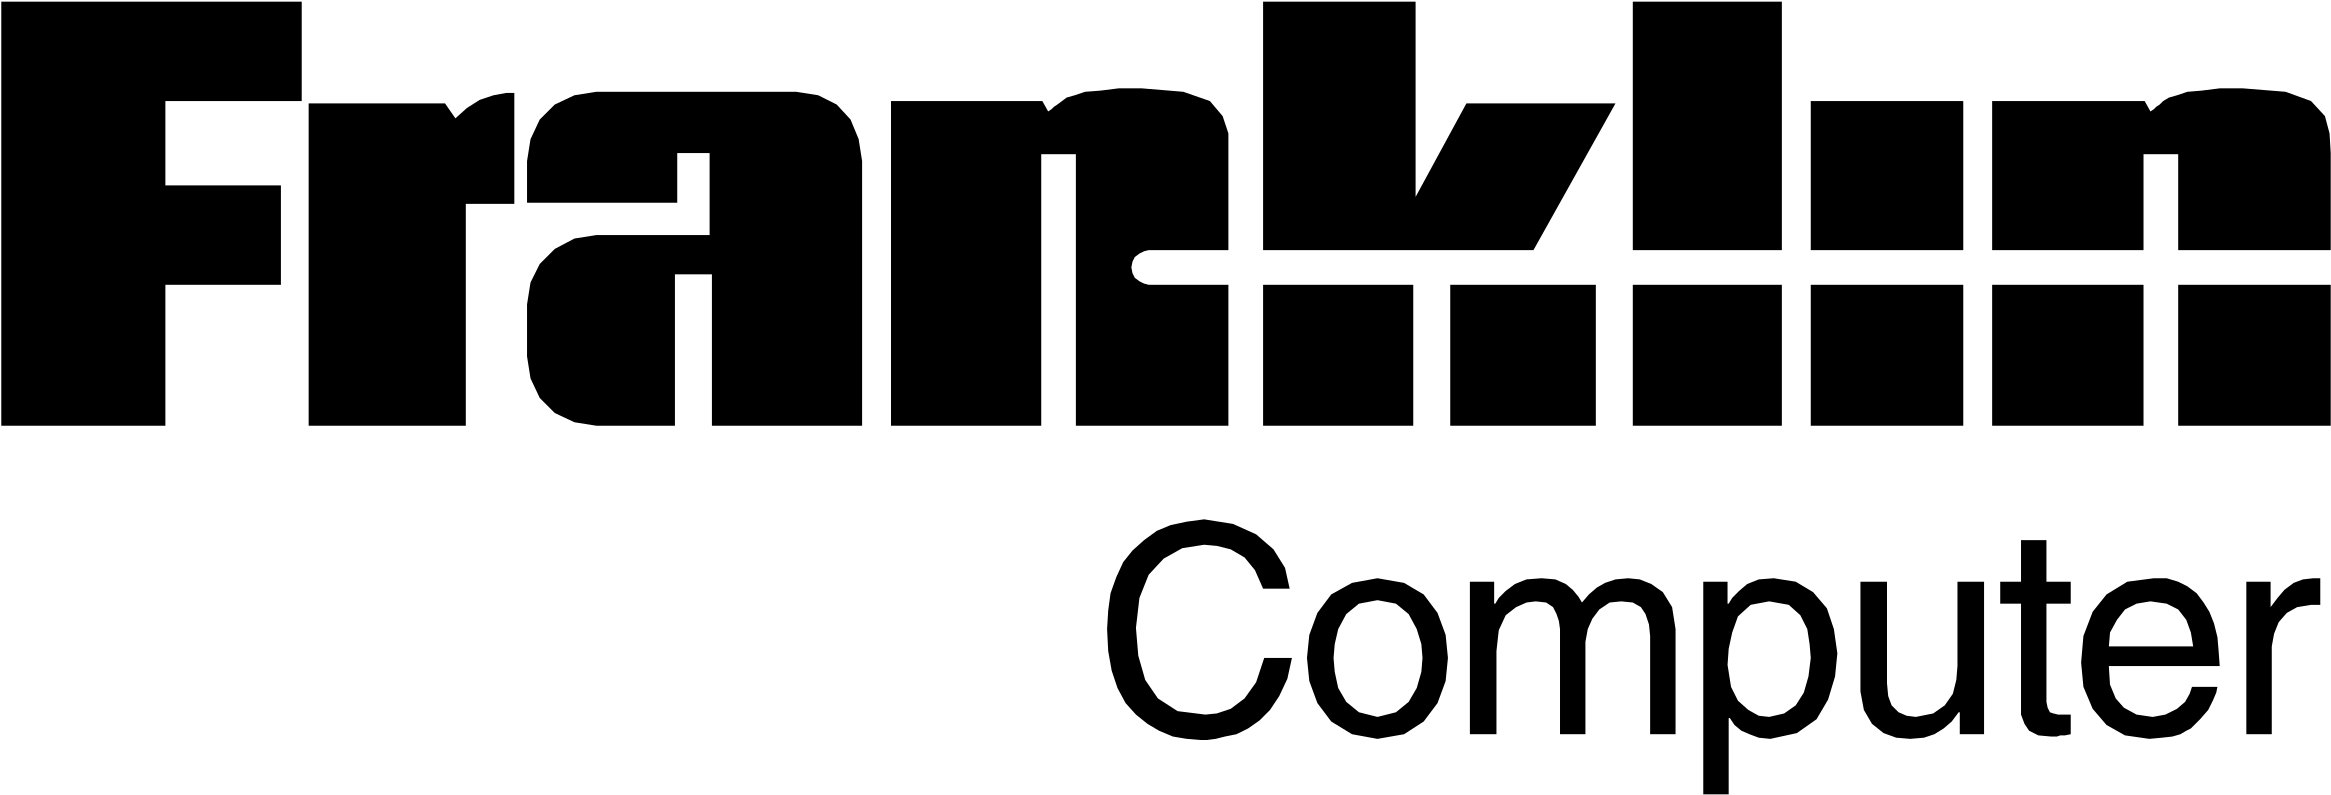 Franklin Computer Logo Png Transparent (2400x2400), Png Download